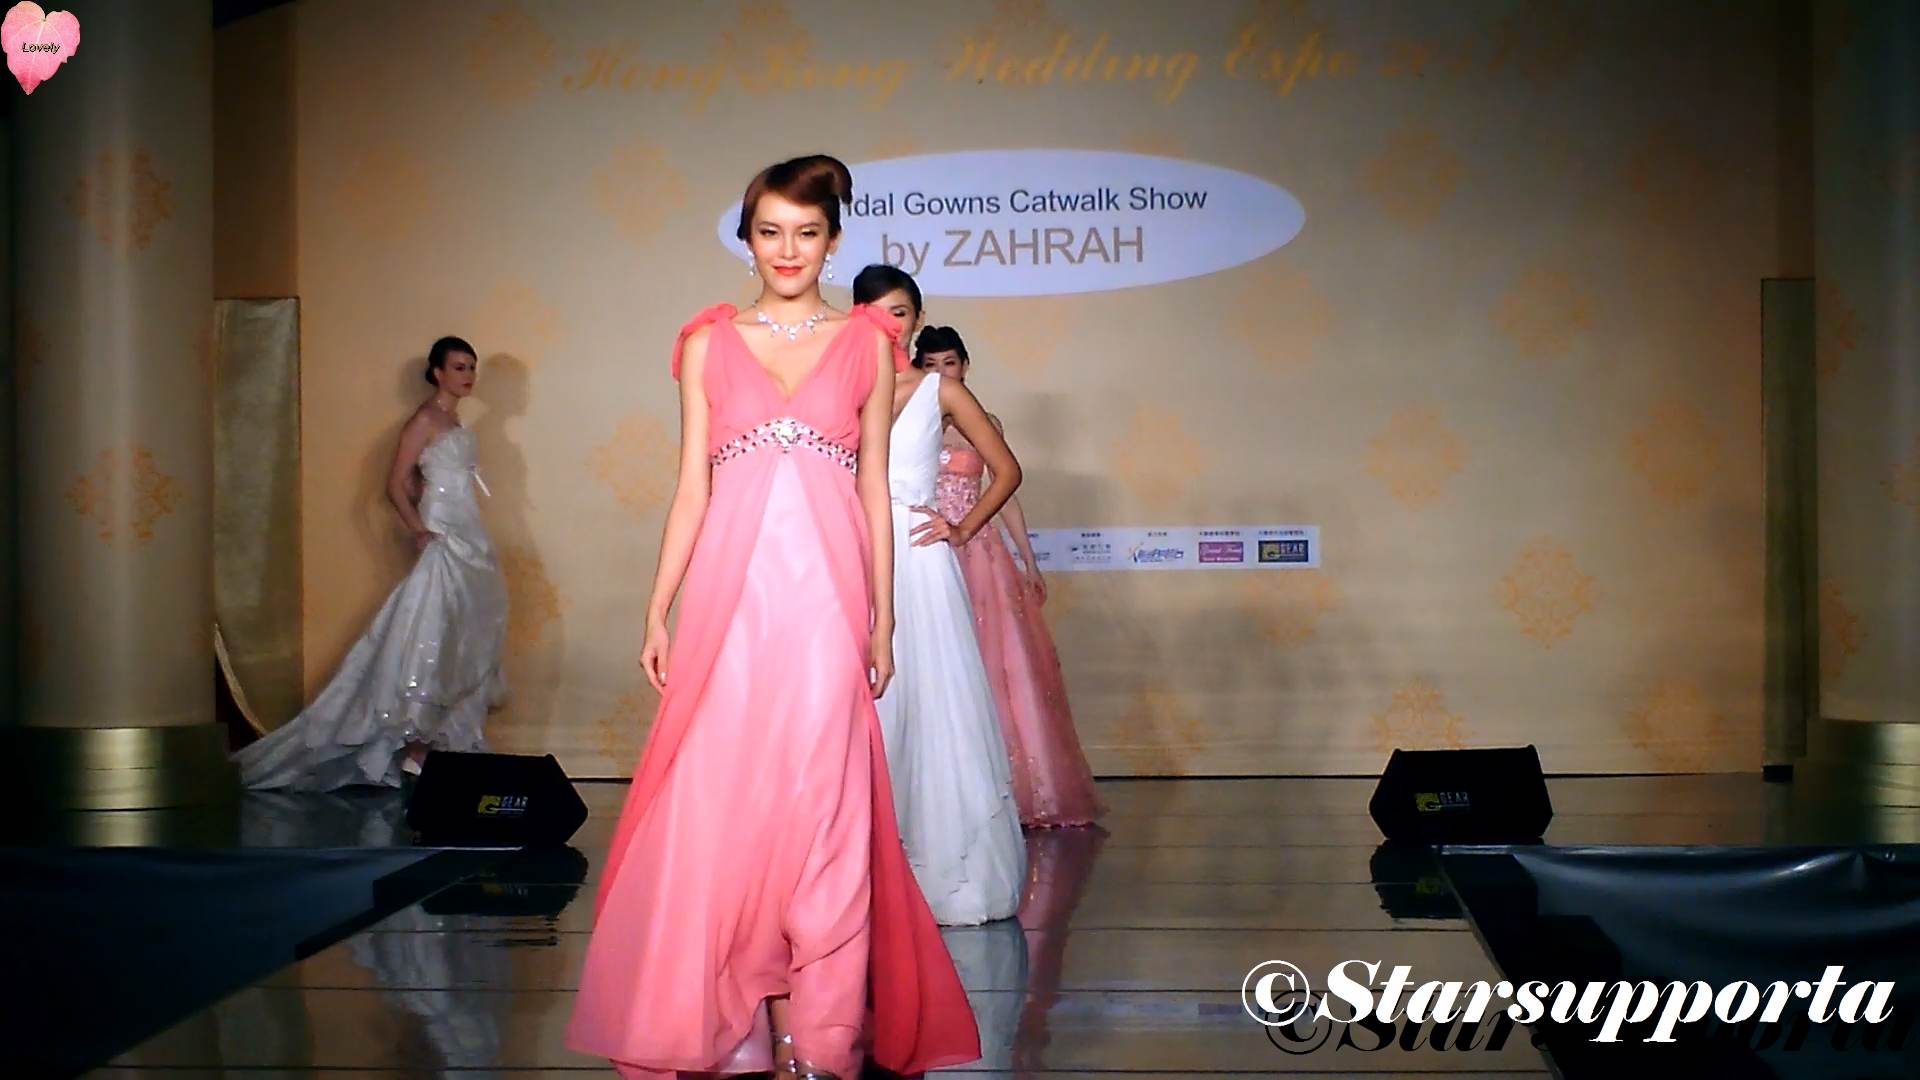 20111105 Hong Kong Wedding Expo - ZAHRAH: Bridal Gowns Catwalk Show @ 香港會議展覽中心 HKCEC (video)